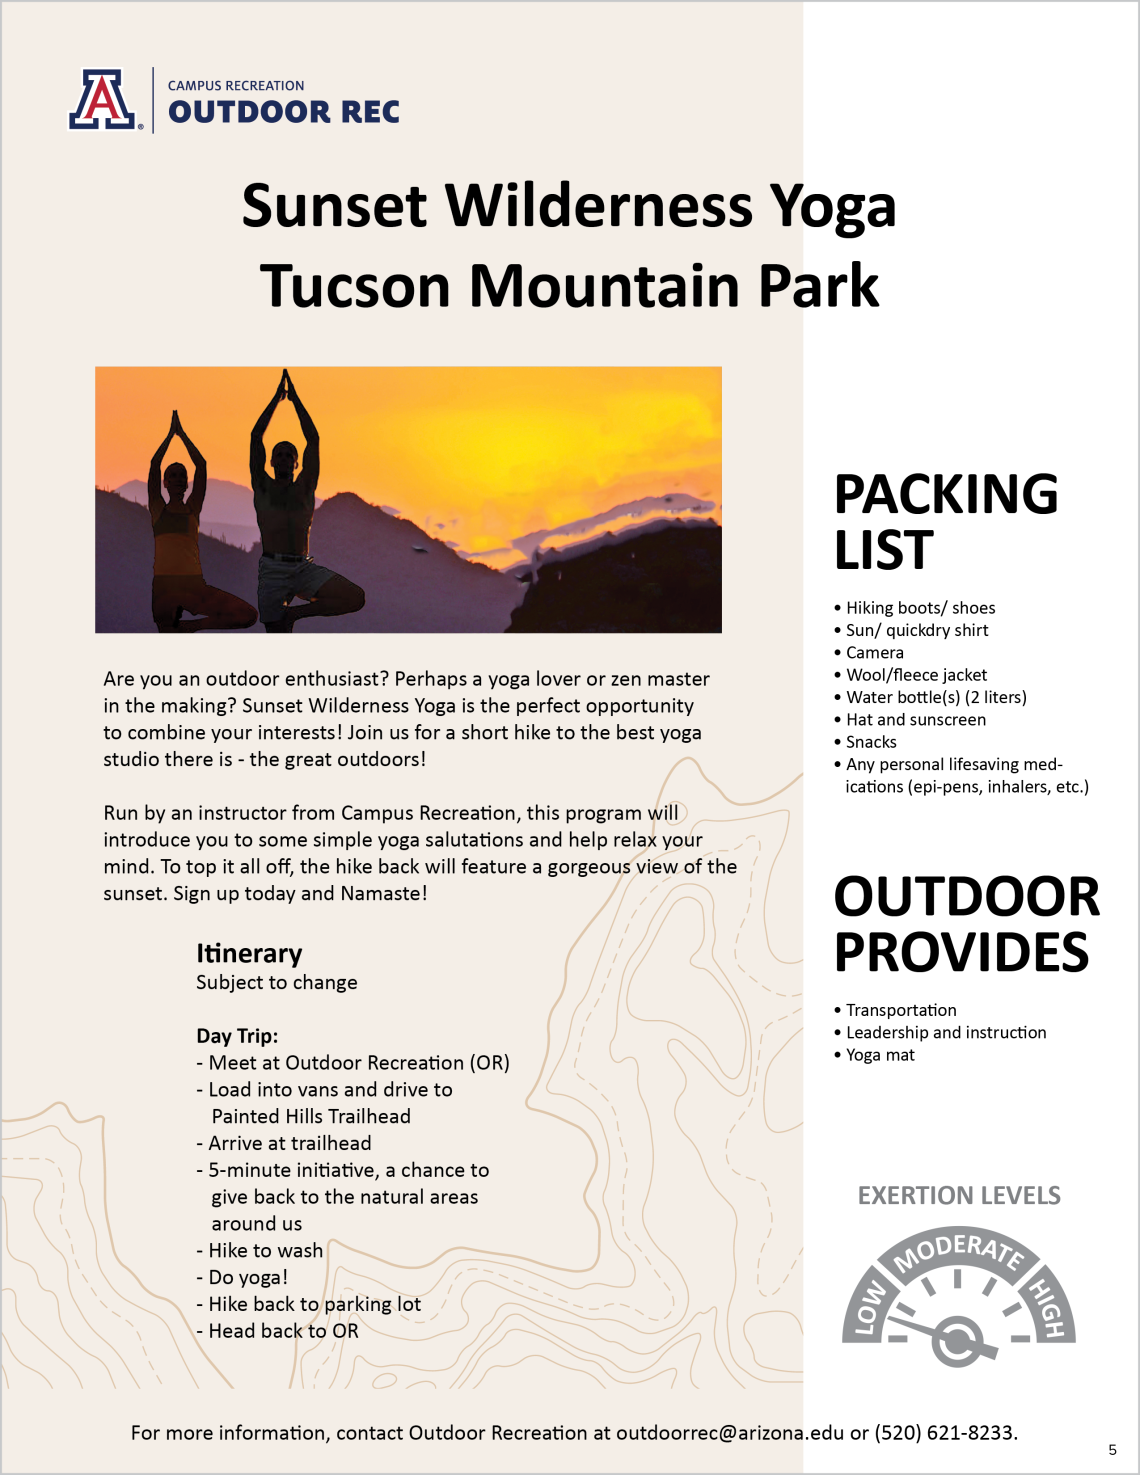 Sunset Wilderness Yoga - Tucson Mountain Park